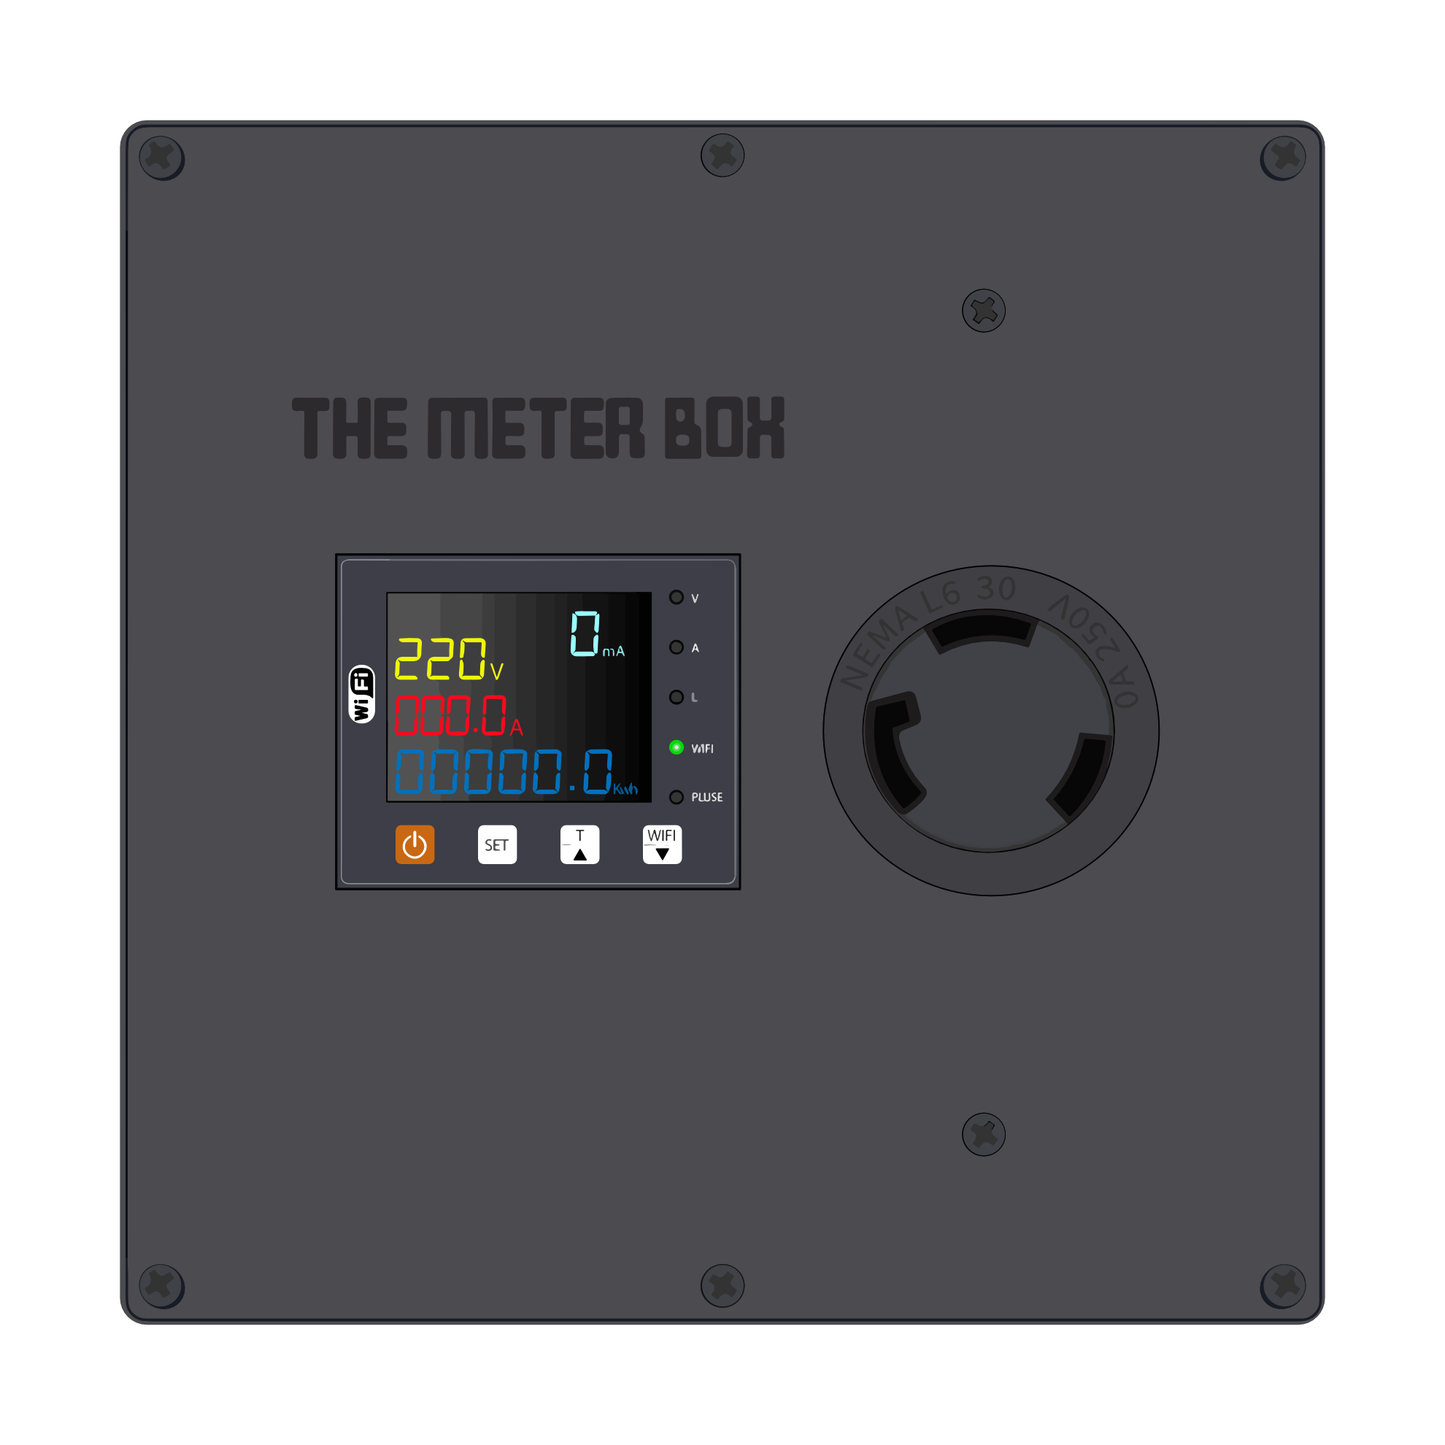 The Meter Box IoT